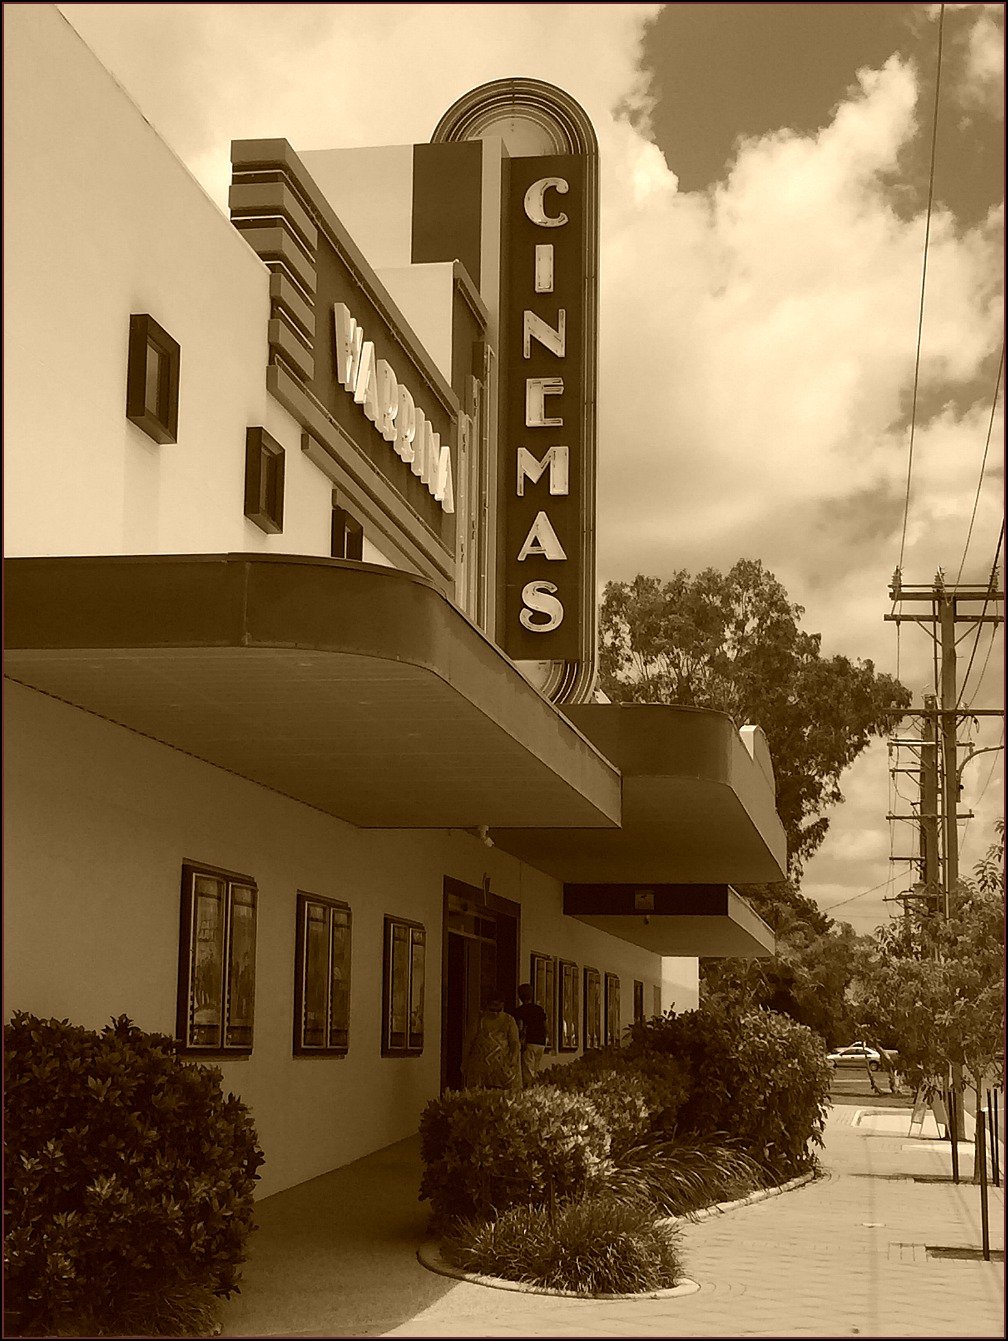 Warrina Cinema Townsville is a modern complex with an old world romance